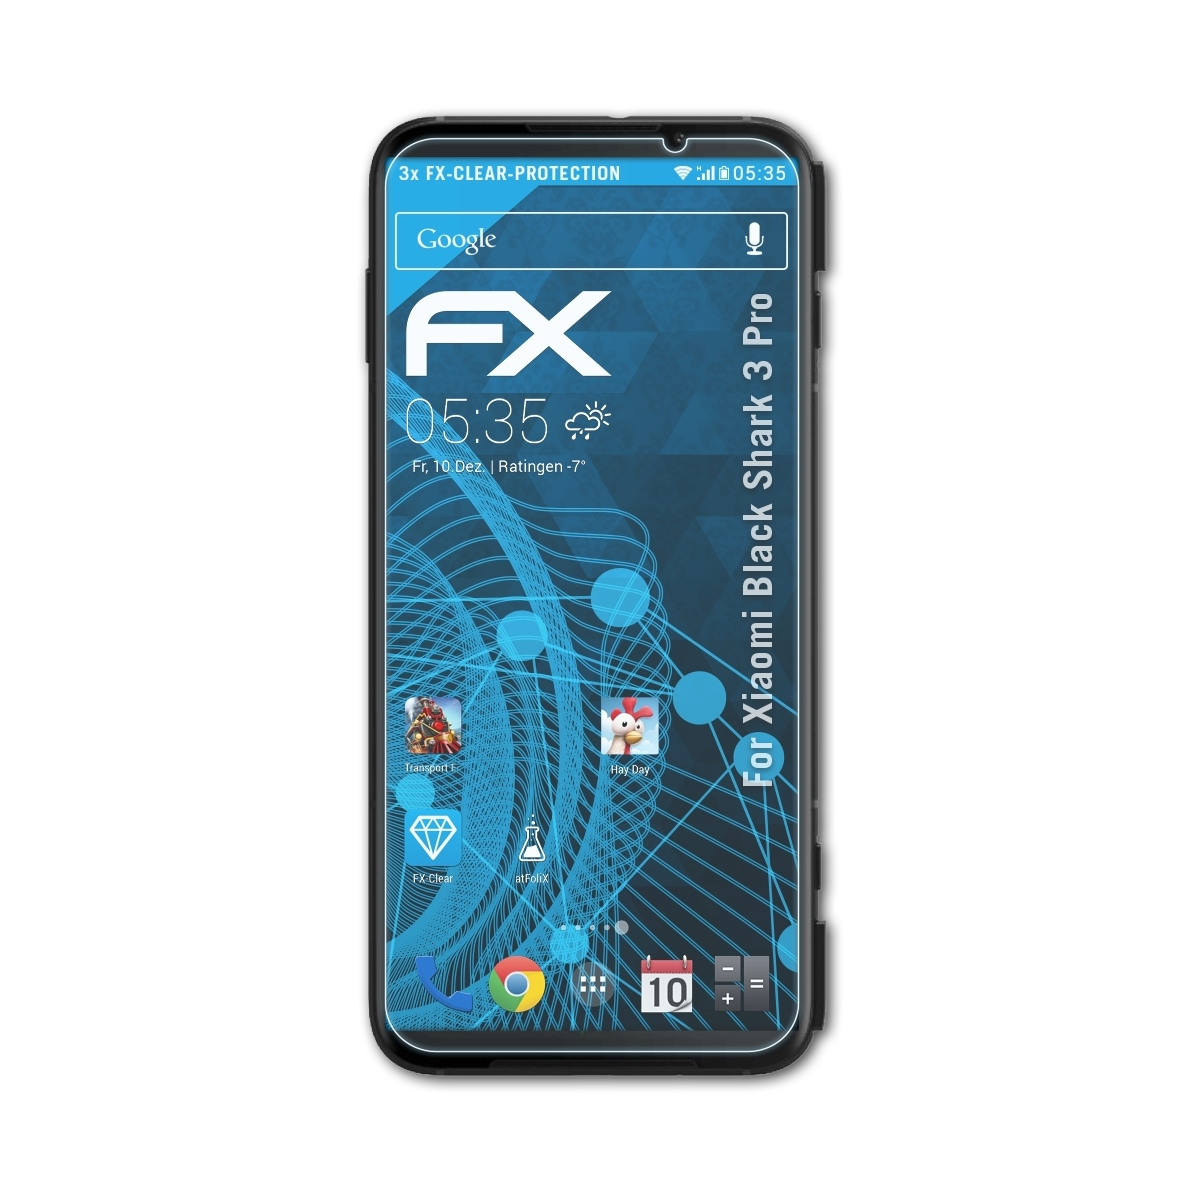 ATFOLIX Xiaomi FX-Clear Displayschutz(für 3 Pro) 3x Black Shark